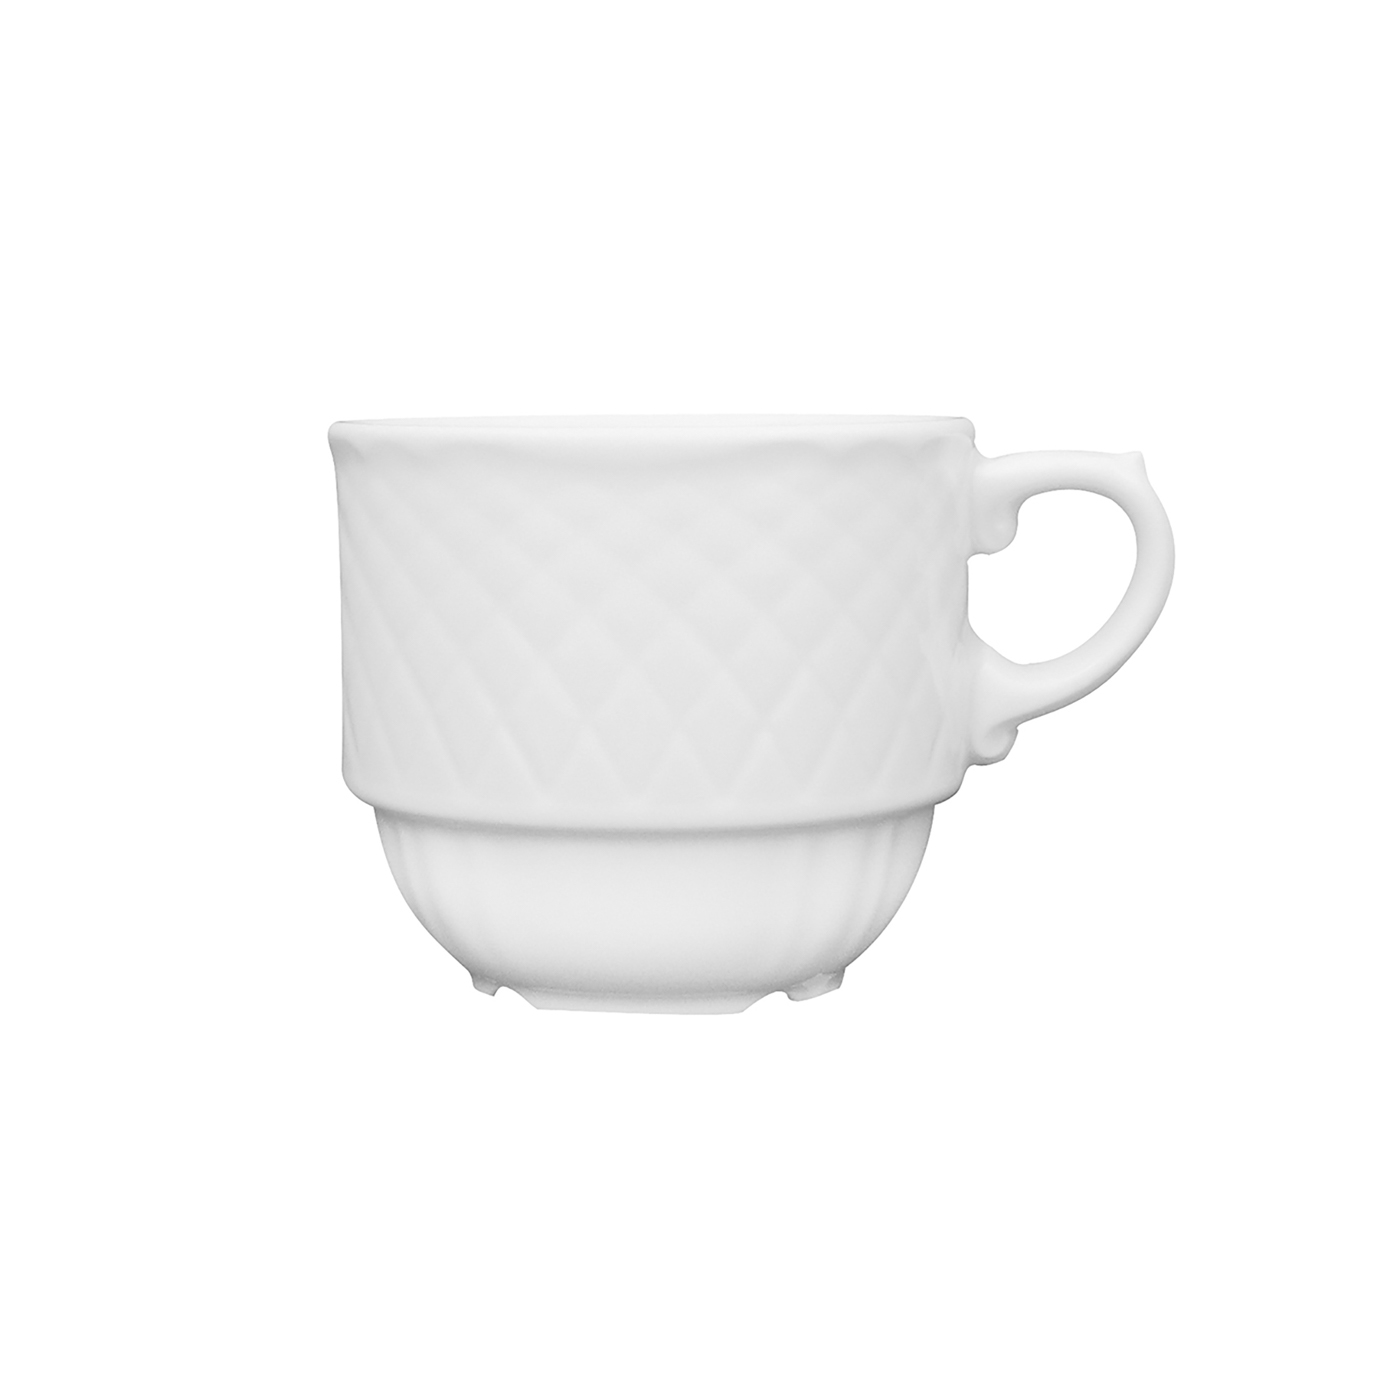 Kaffee-Obertasse - hohe Form - Inhalt 0,20 ltr -, Form LA REINE - uni weiß - stapelbar, ohne Untertasse